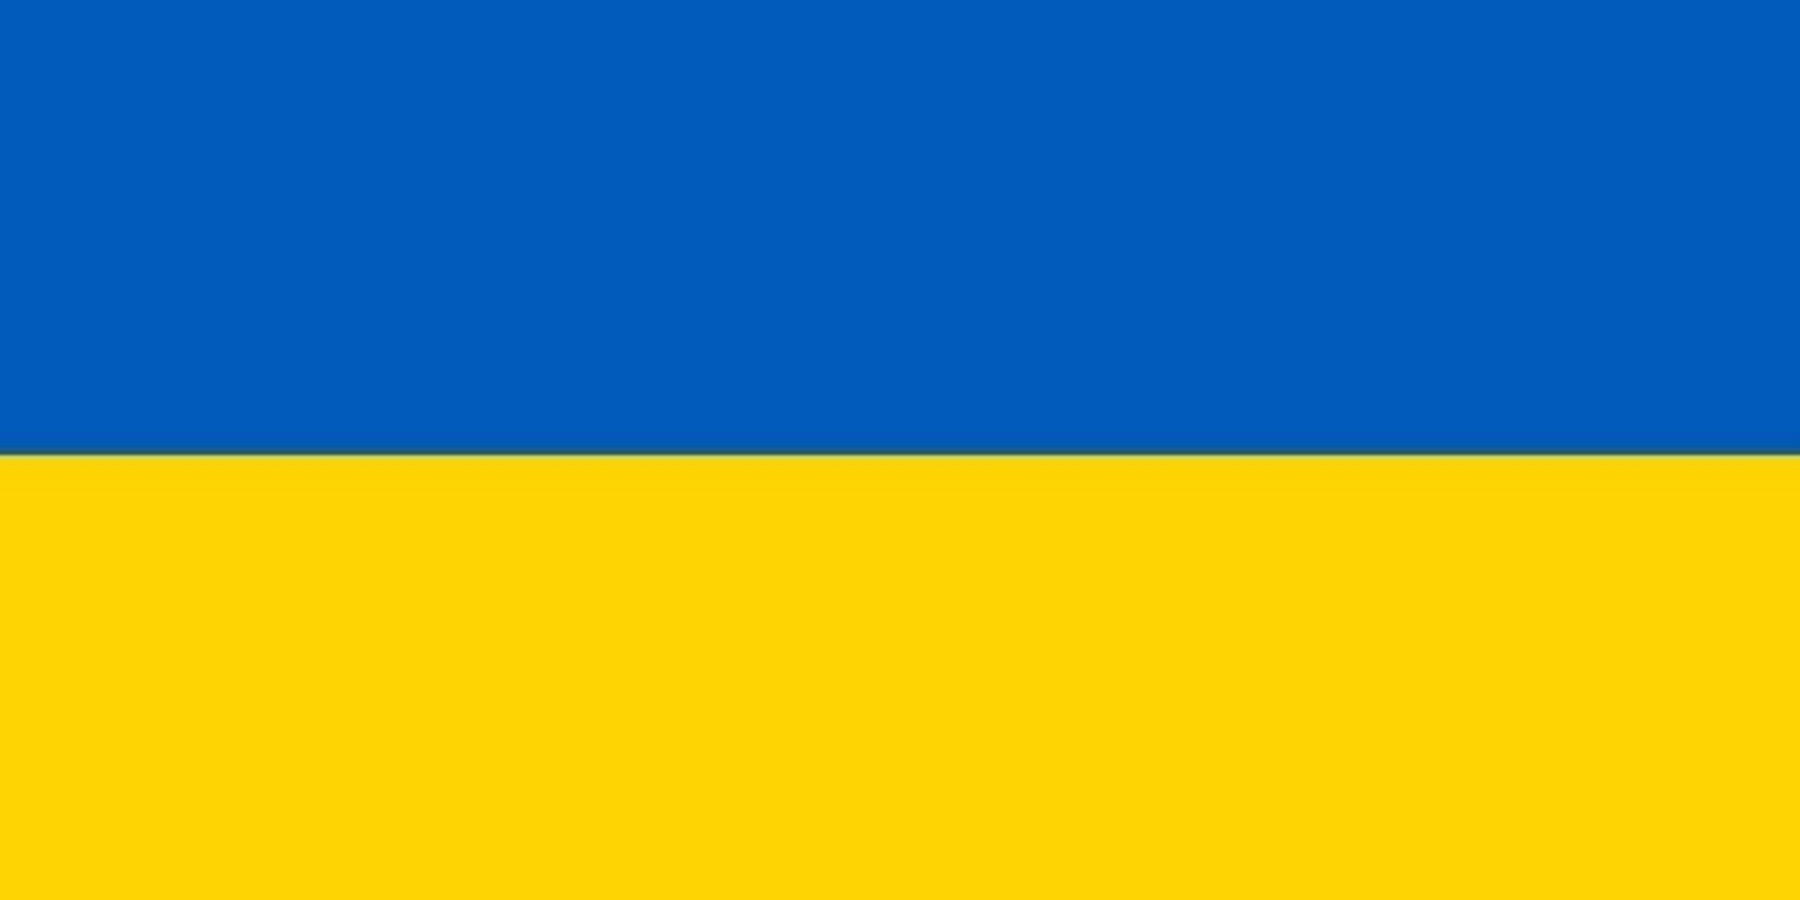 An image of the Ukrainian flag.